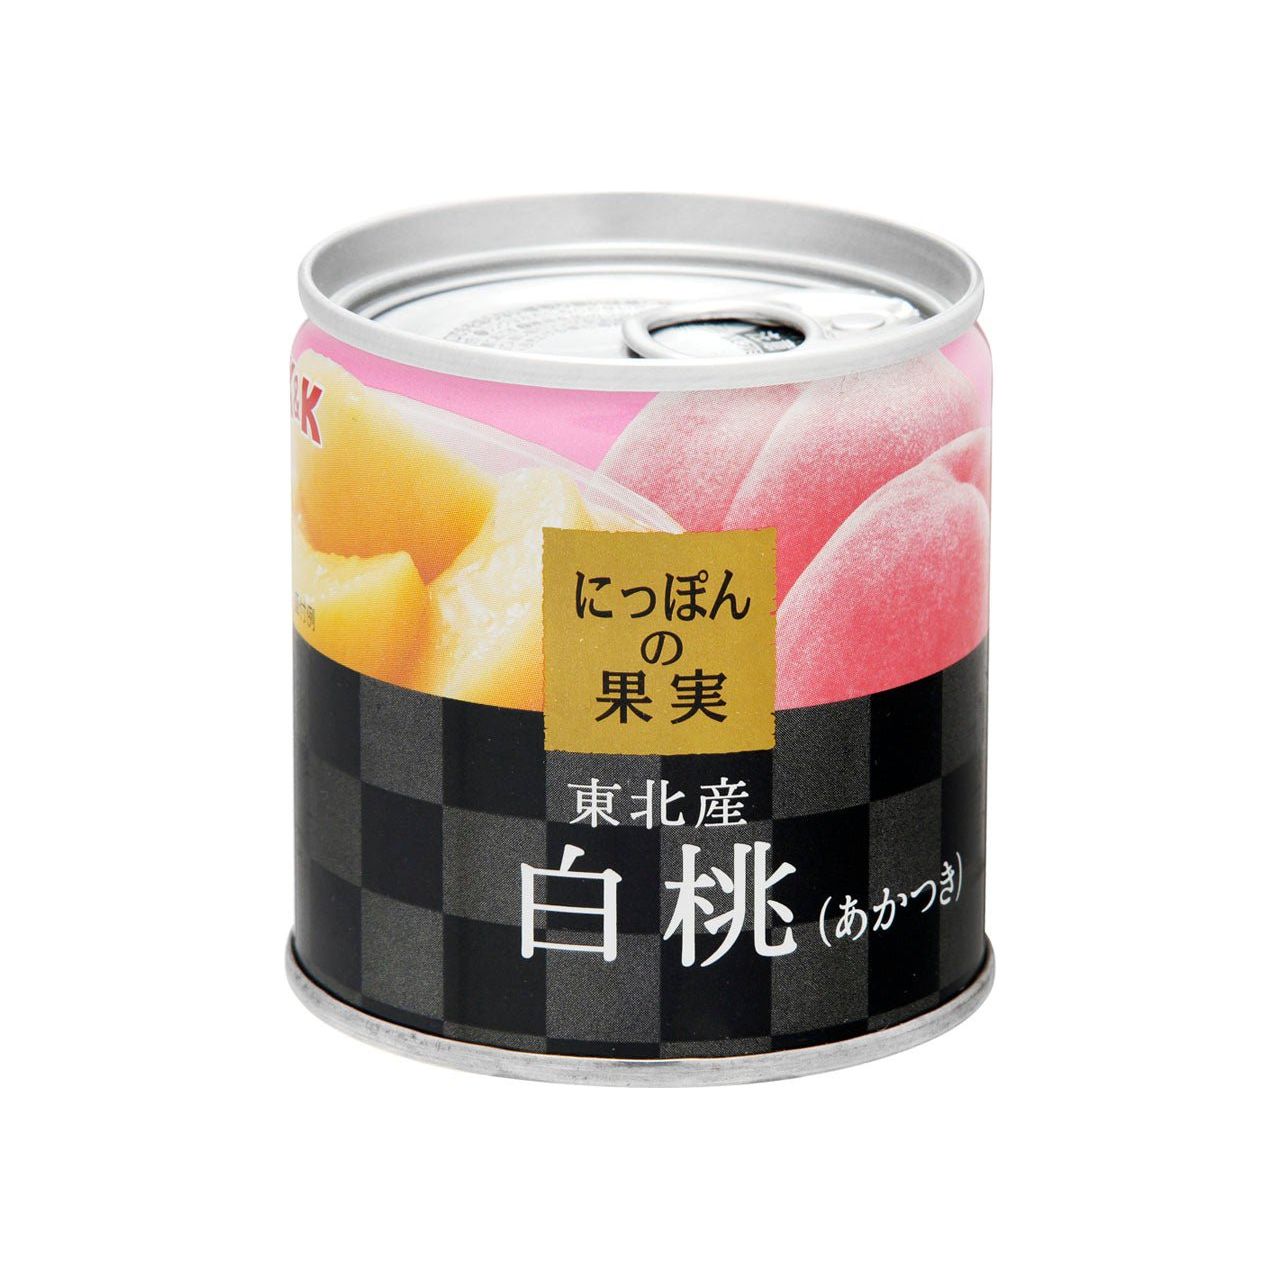 K&K Nippon Fruit Tohoku White Peach (Akatsuki)